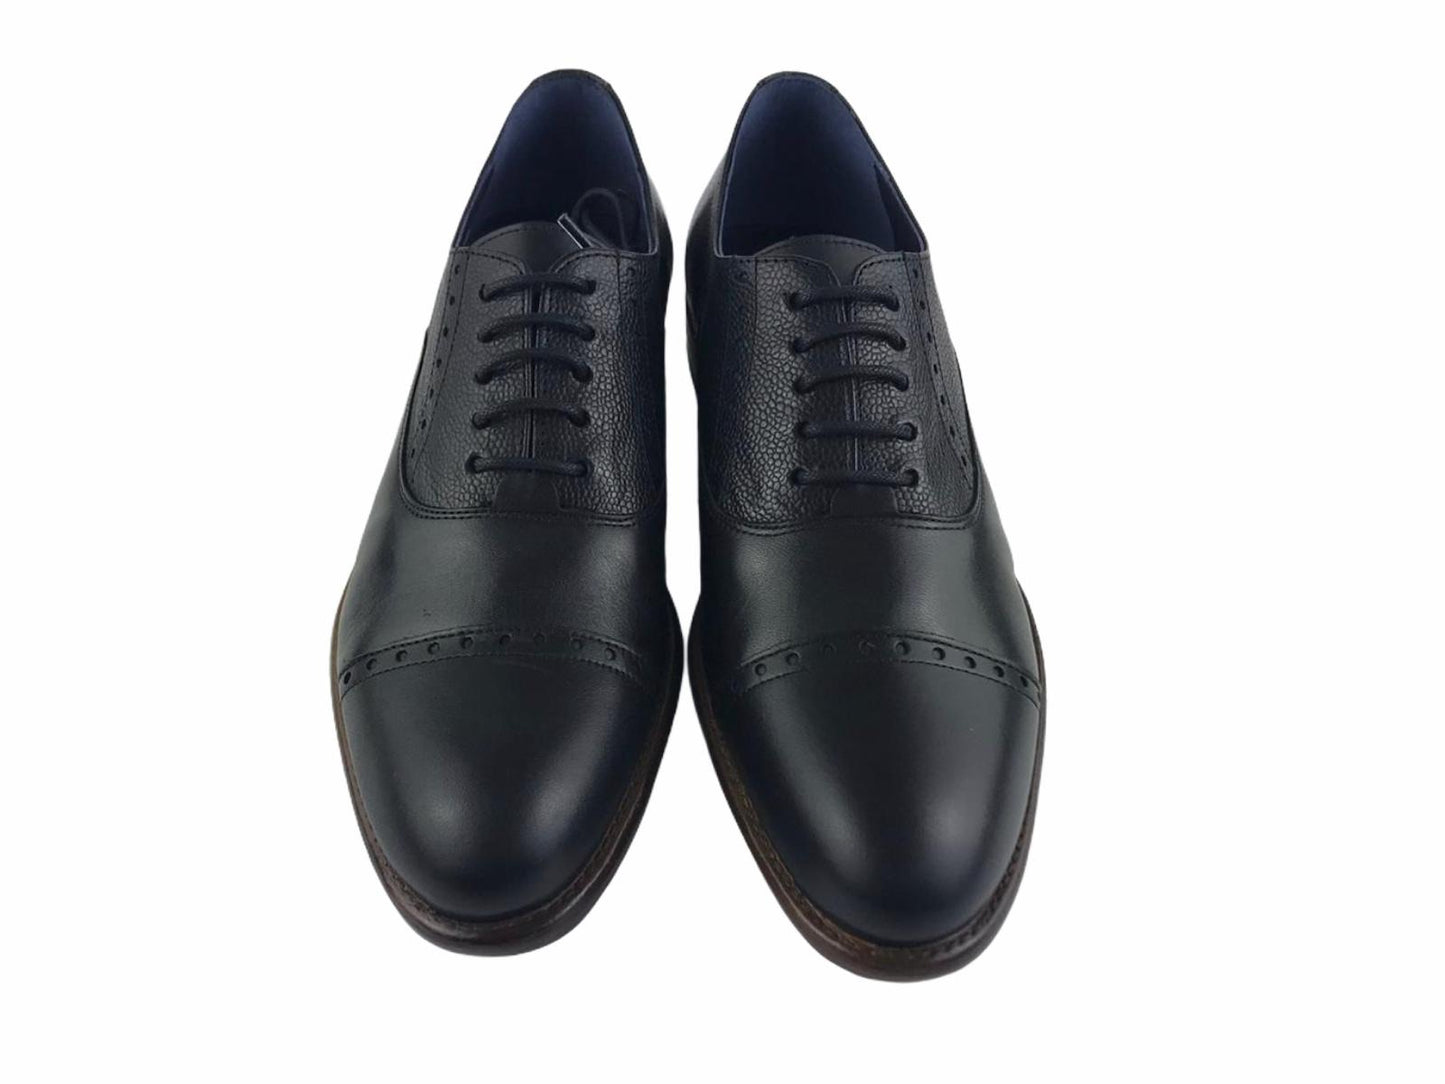 Tolino | Chaussure habillée homme Toledano noir